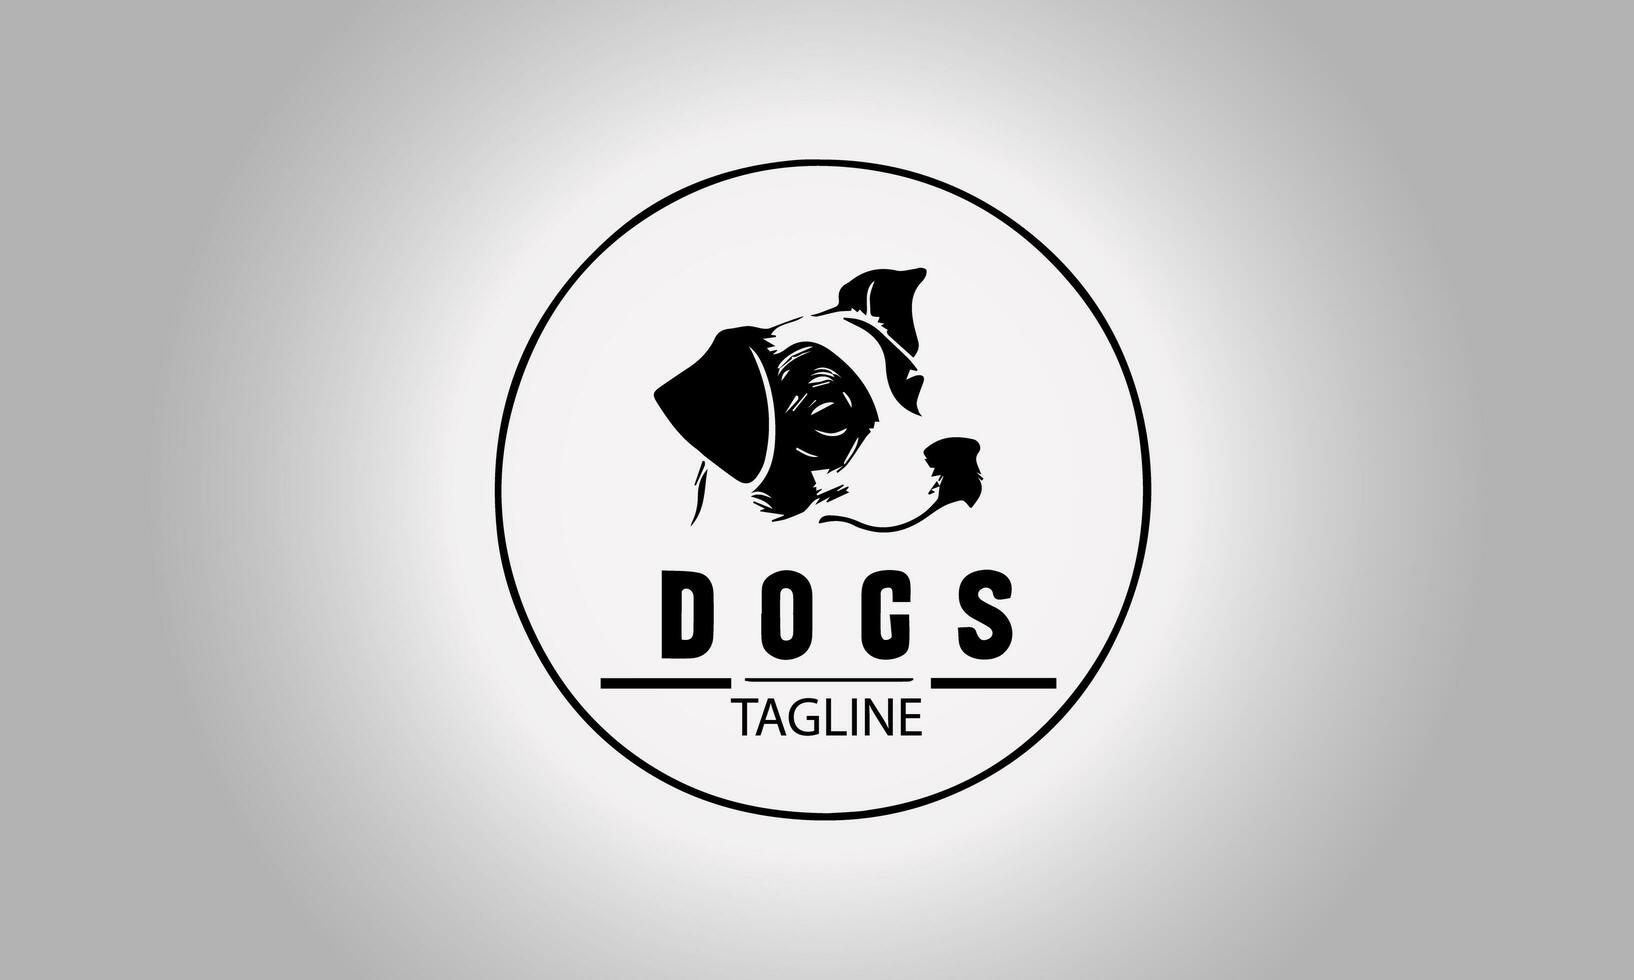 A simple dog head logo or badge illustration photo